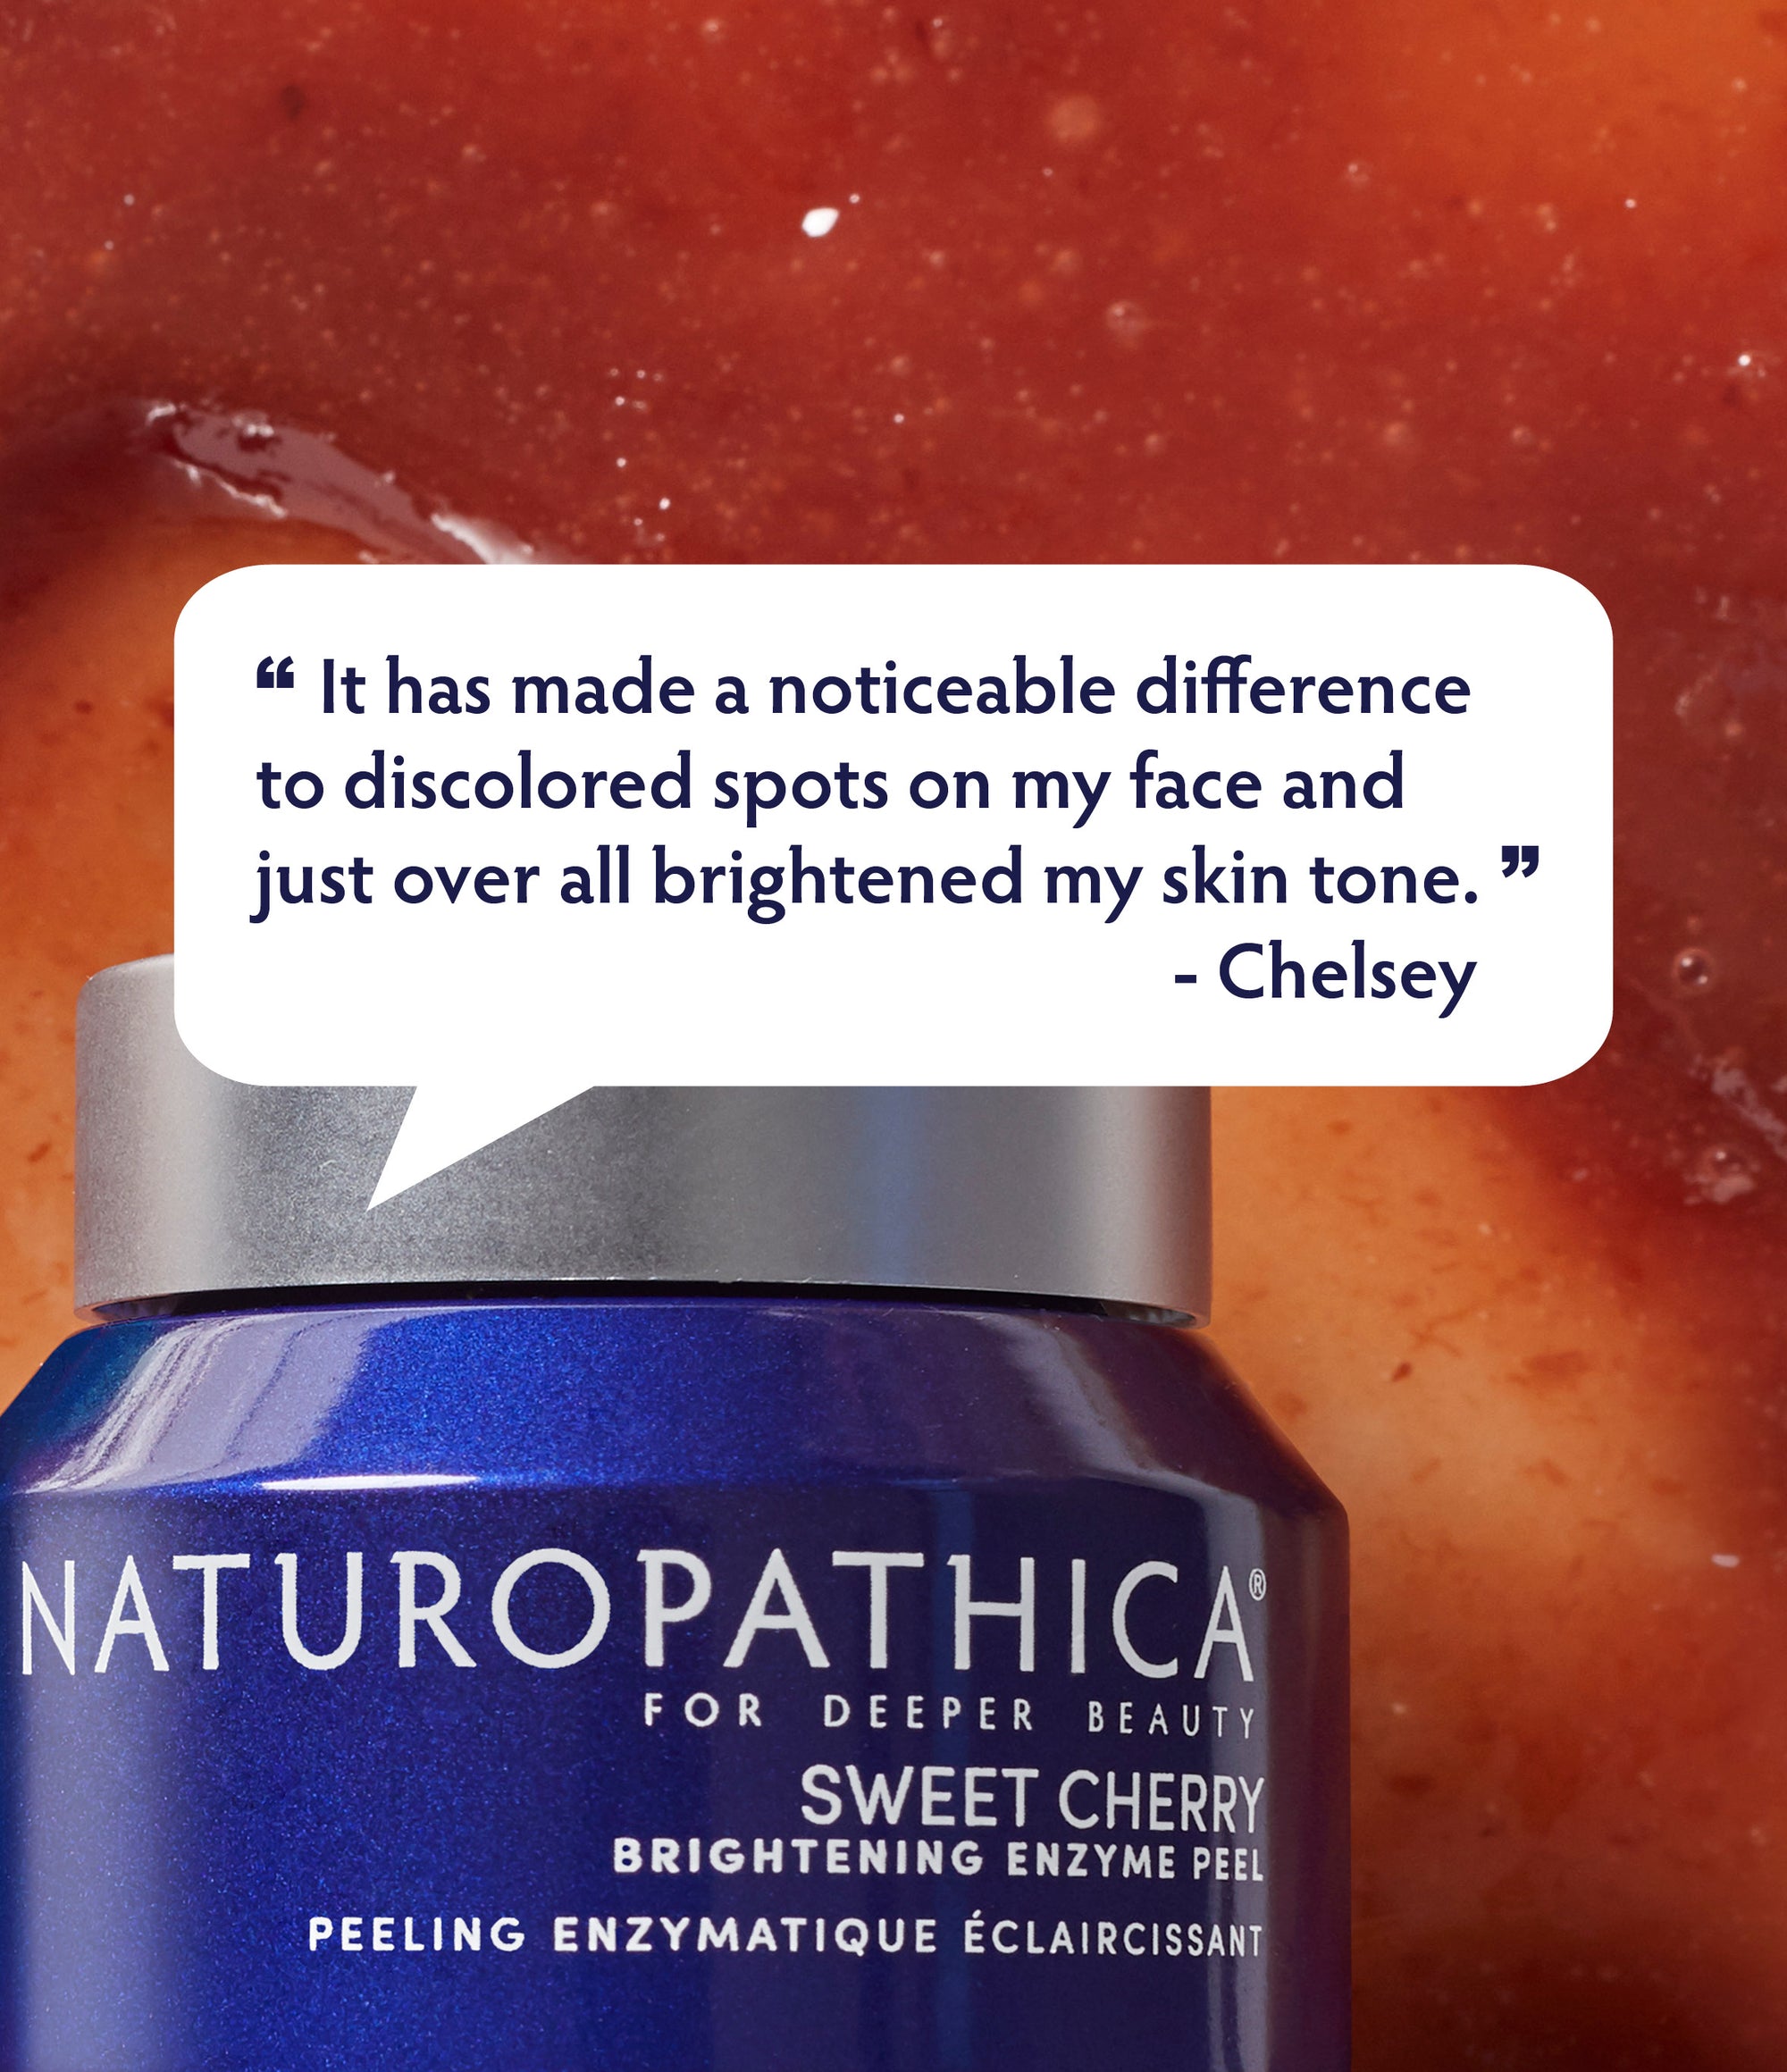 Sweet Cherry Brightening Enzyme Peel customer quote